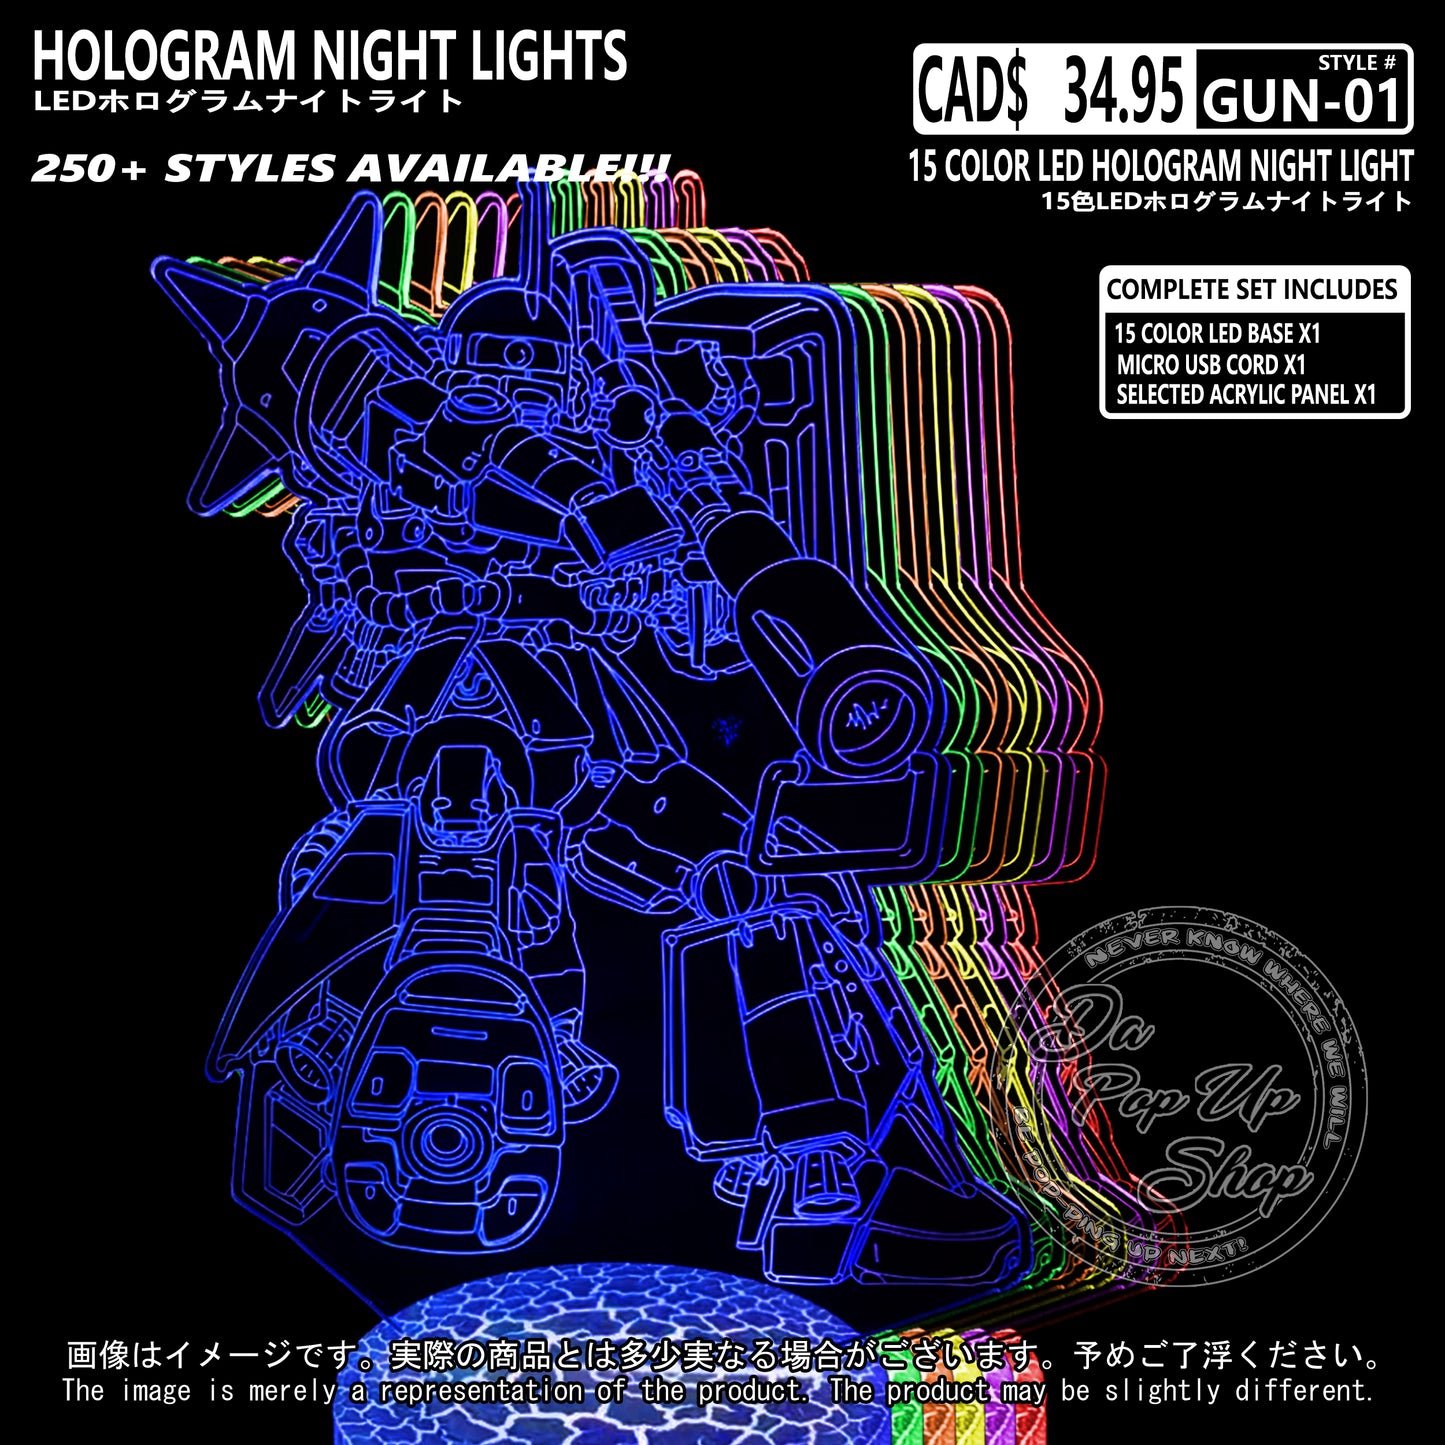 (GUN-01) Gundam Hologram LED Night Light